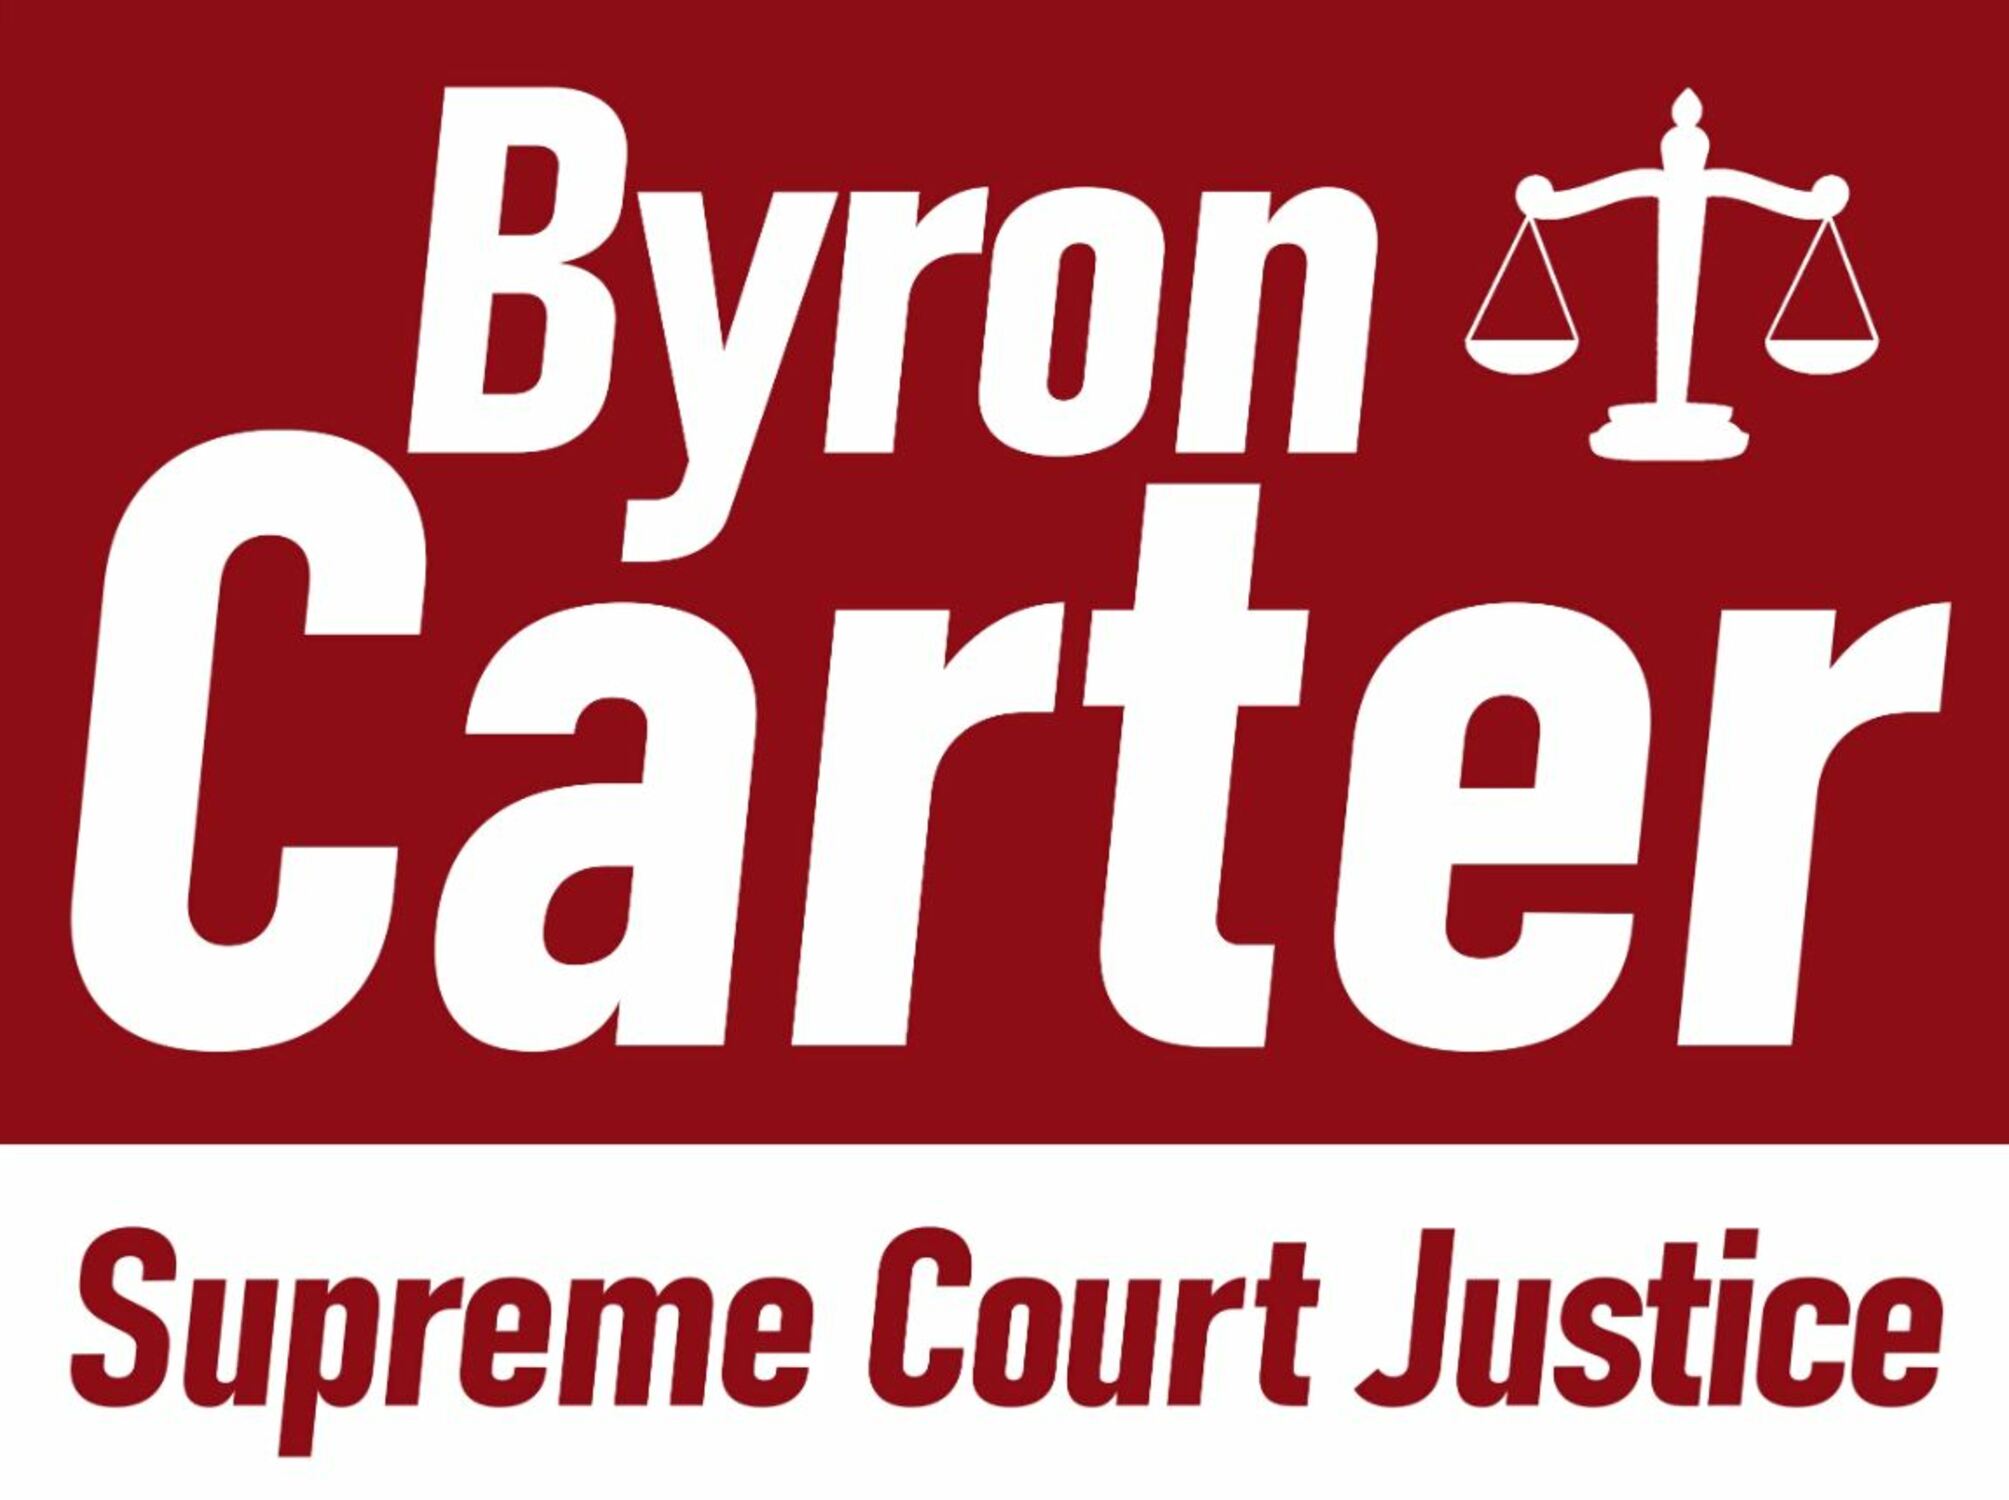 Byron Carter for Supreme Court